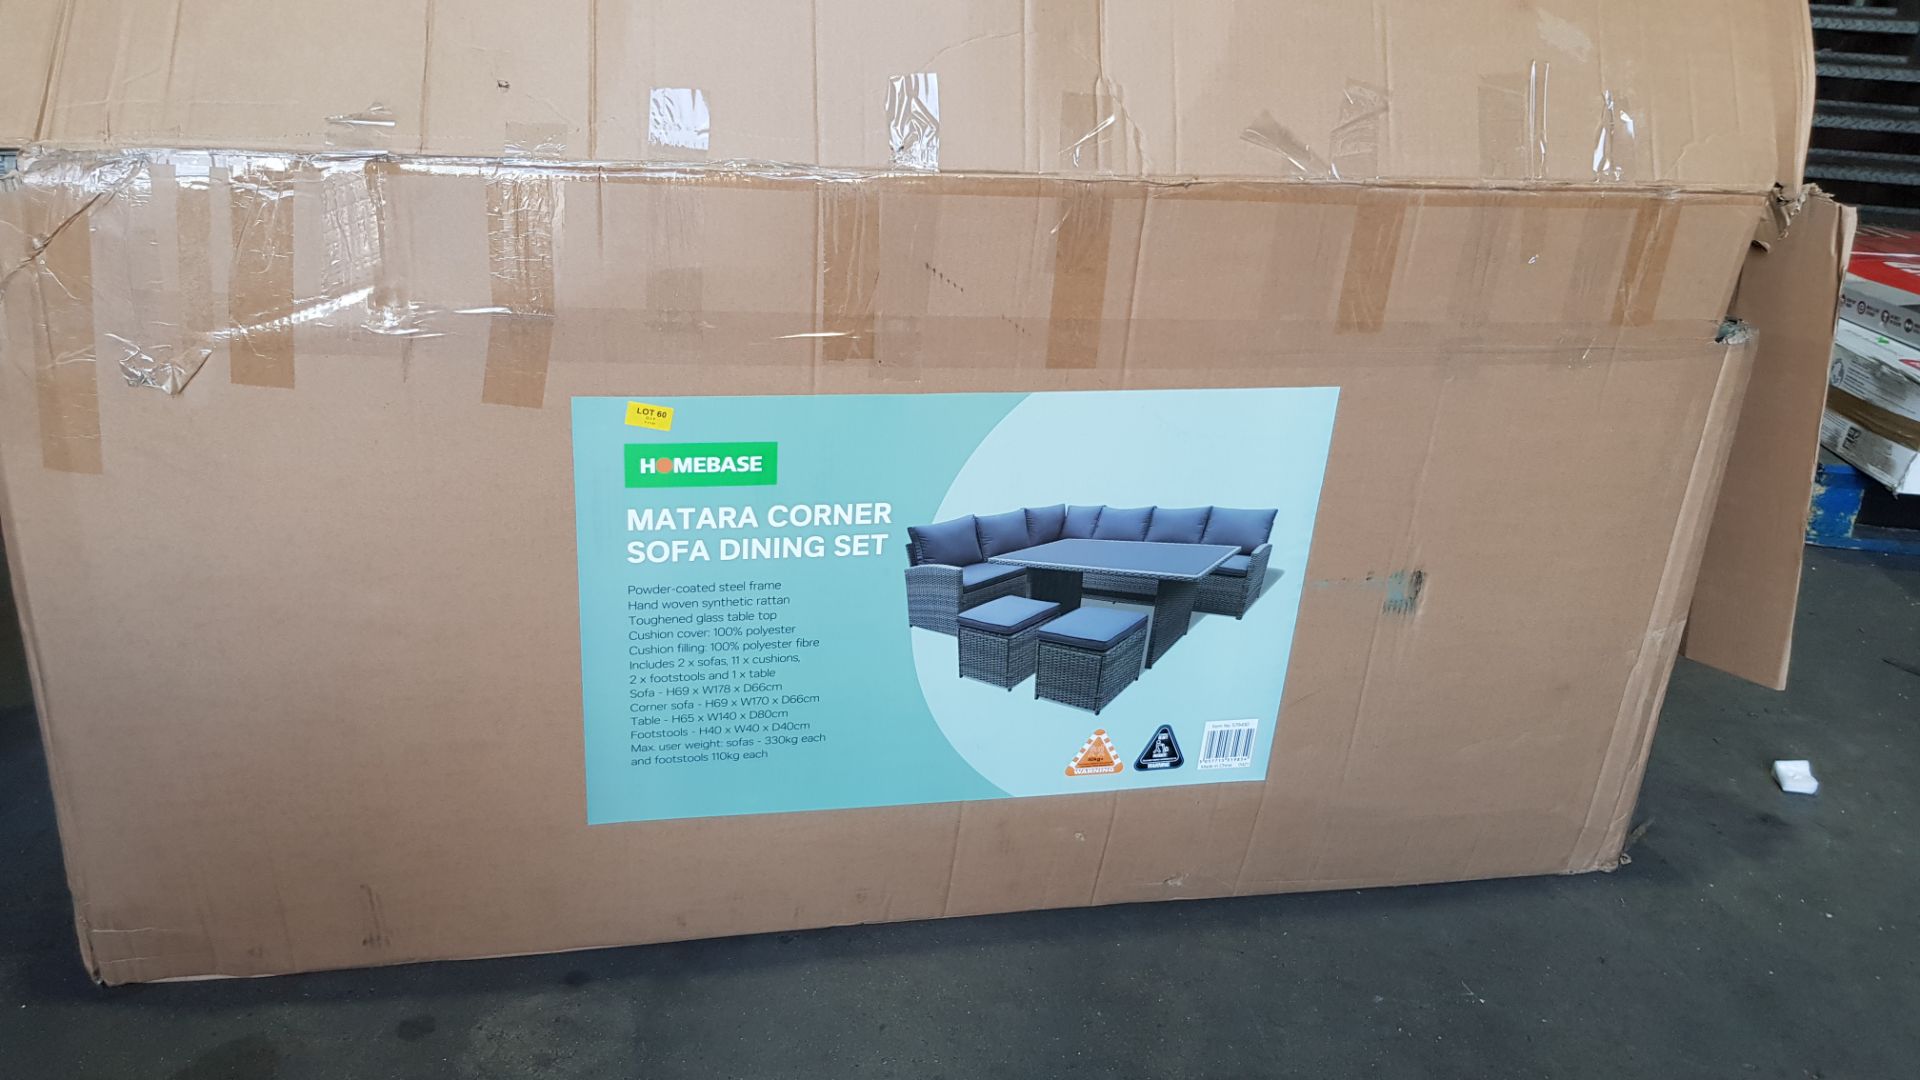 (P9) 1x Matara Corner Sofa Dining Set RRP £700. Contents Appear As New, In Original Packaging But - Image 2 of 6